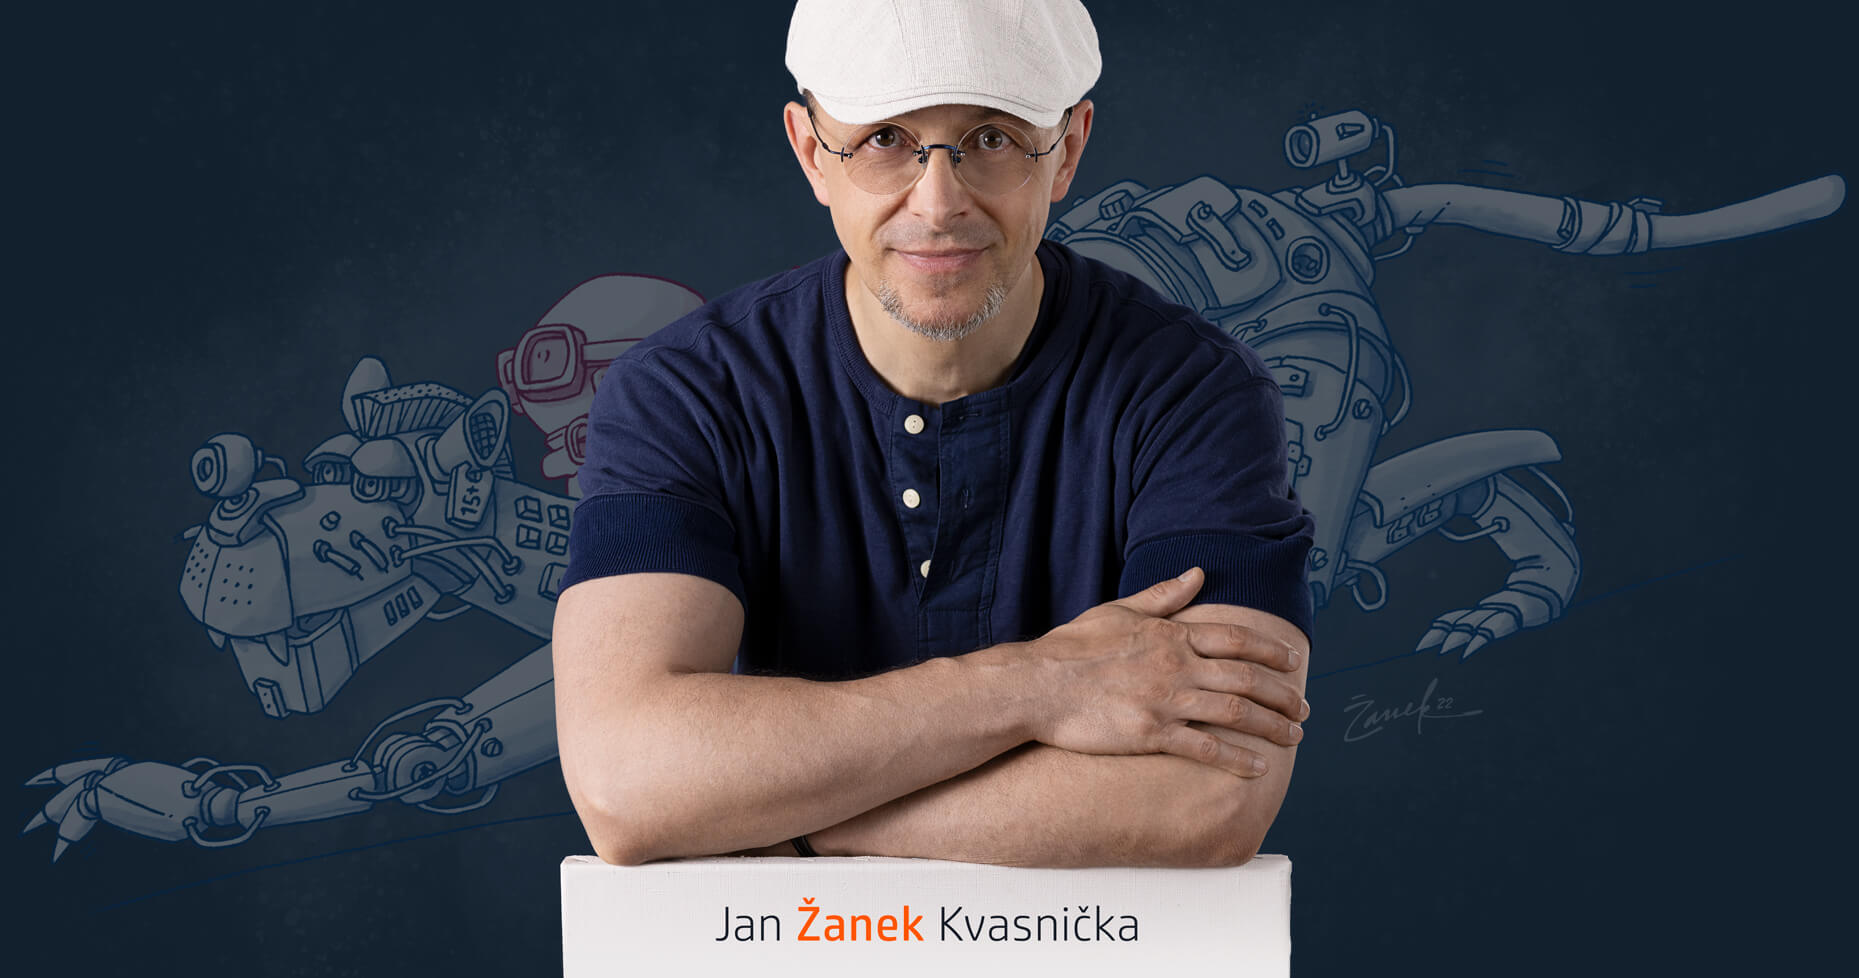 Jan Žanek Kvasnička